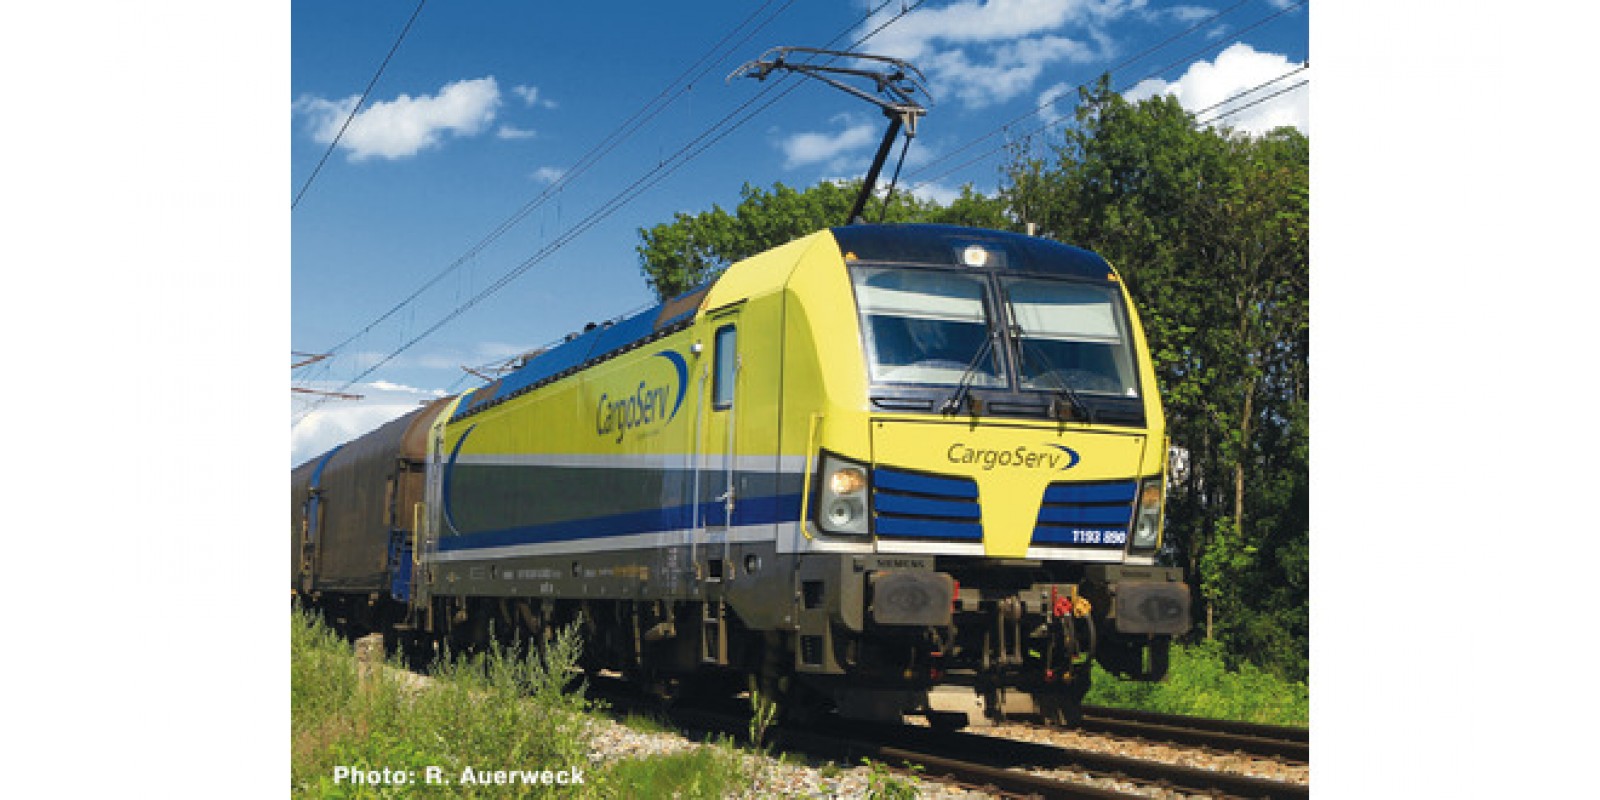 RO79924 - Electric locomotive 1193 890, Cargoserv